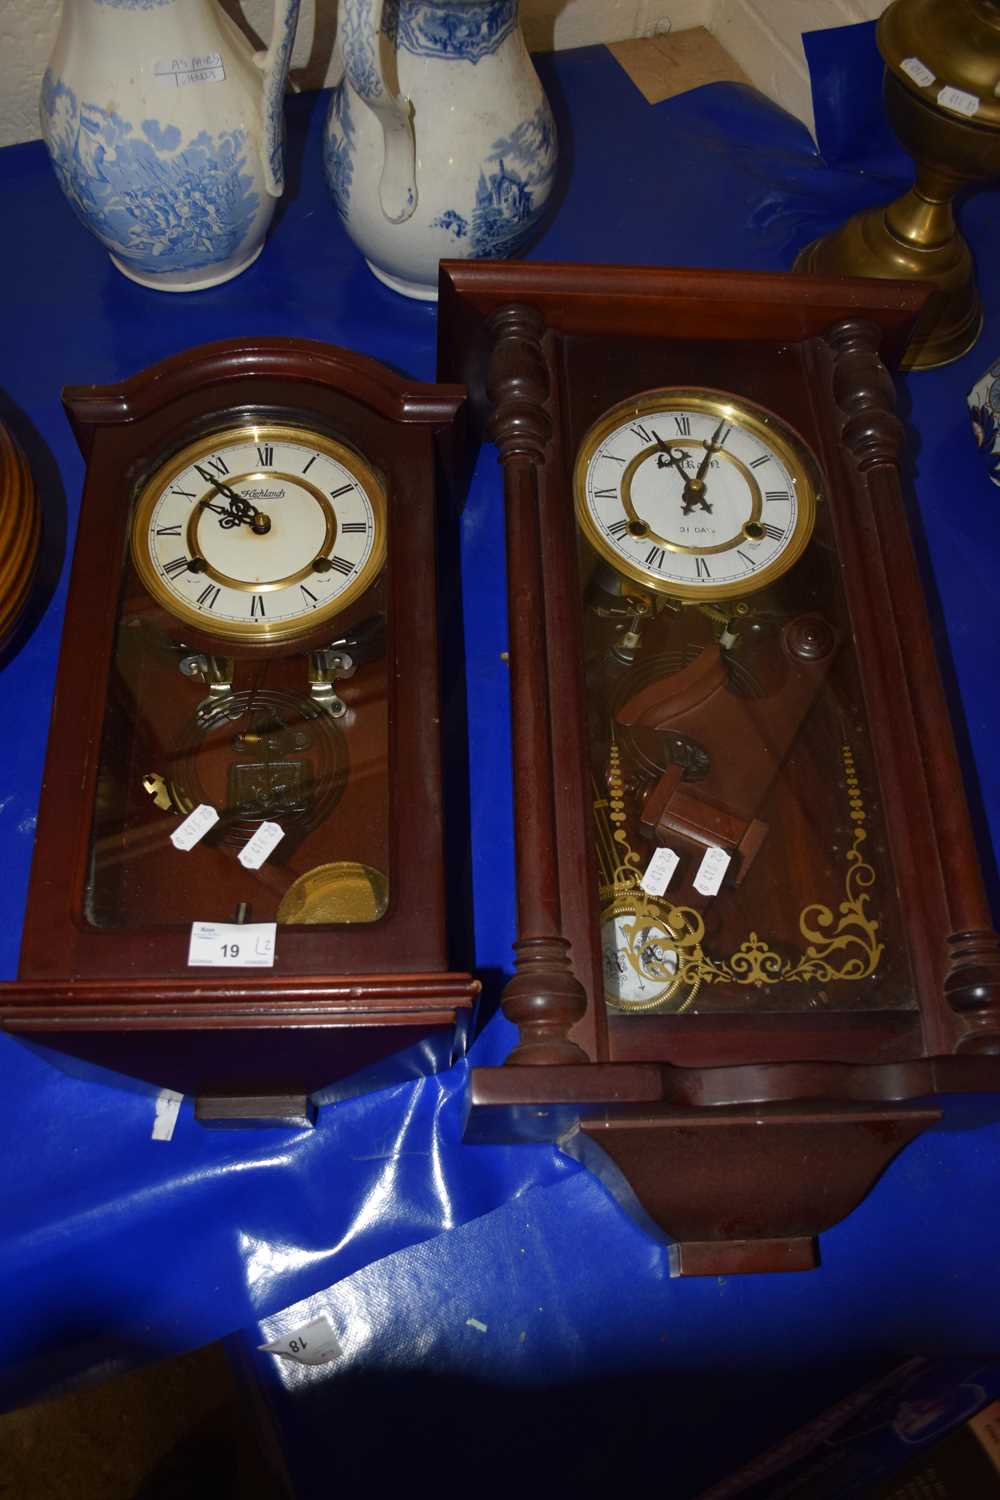 Two modern wall clocks